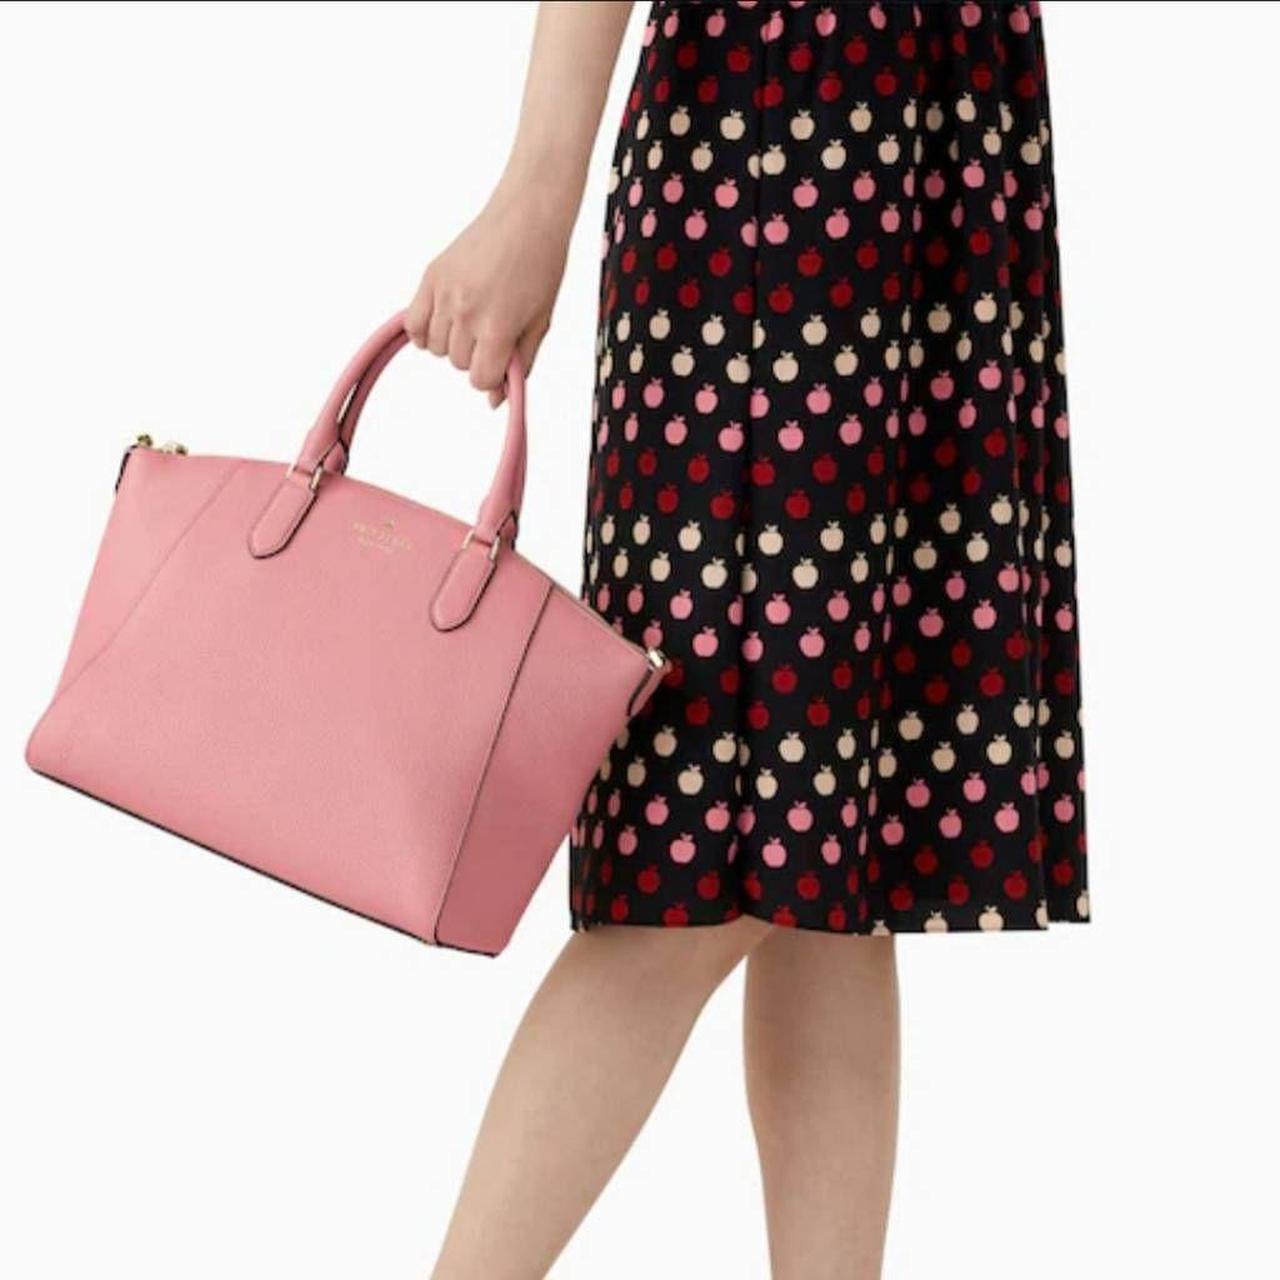 Kate Spade New York Women's Pink and Gold Bag | Depop